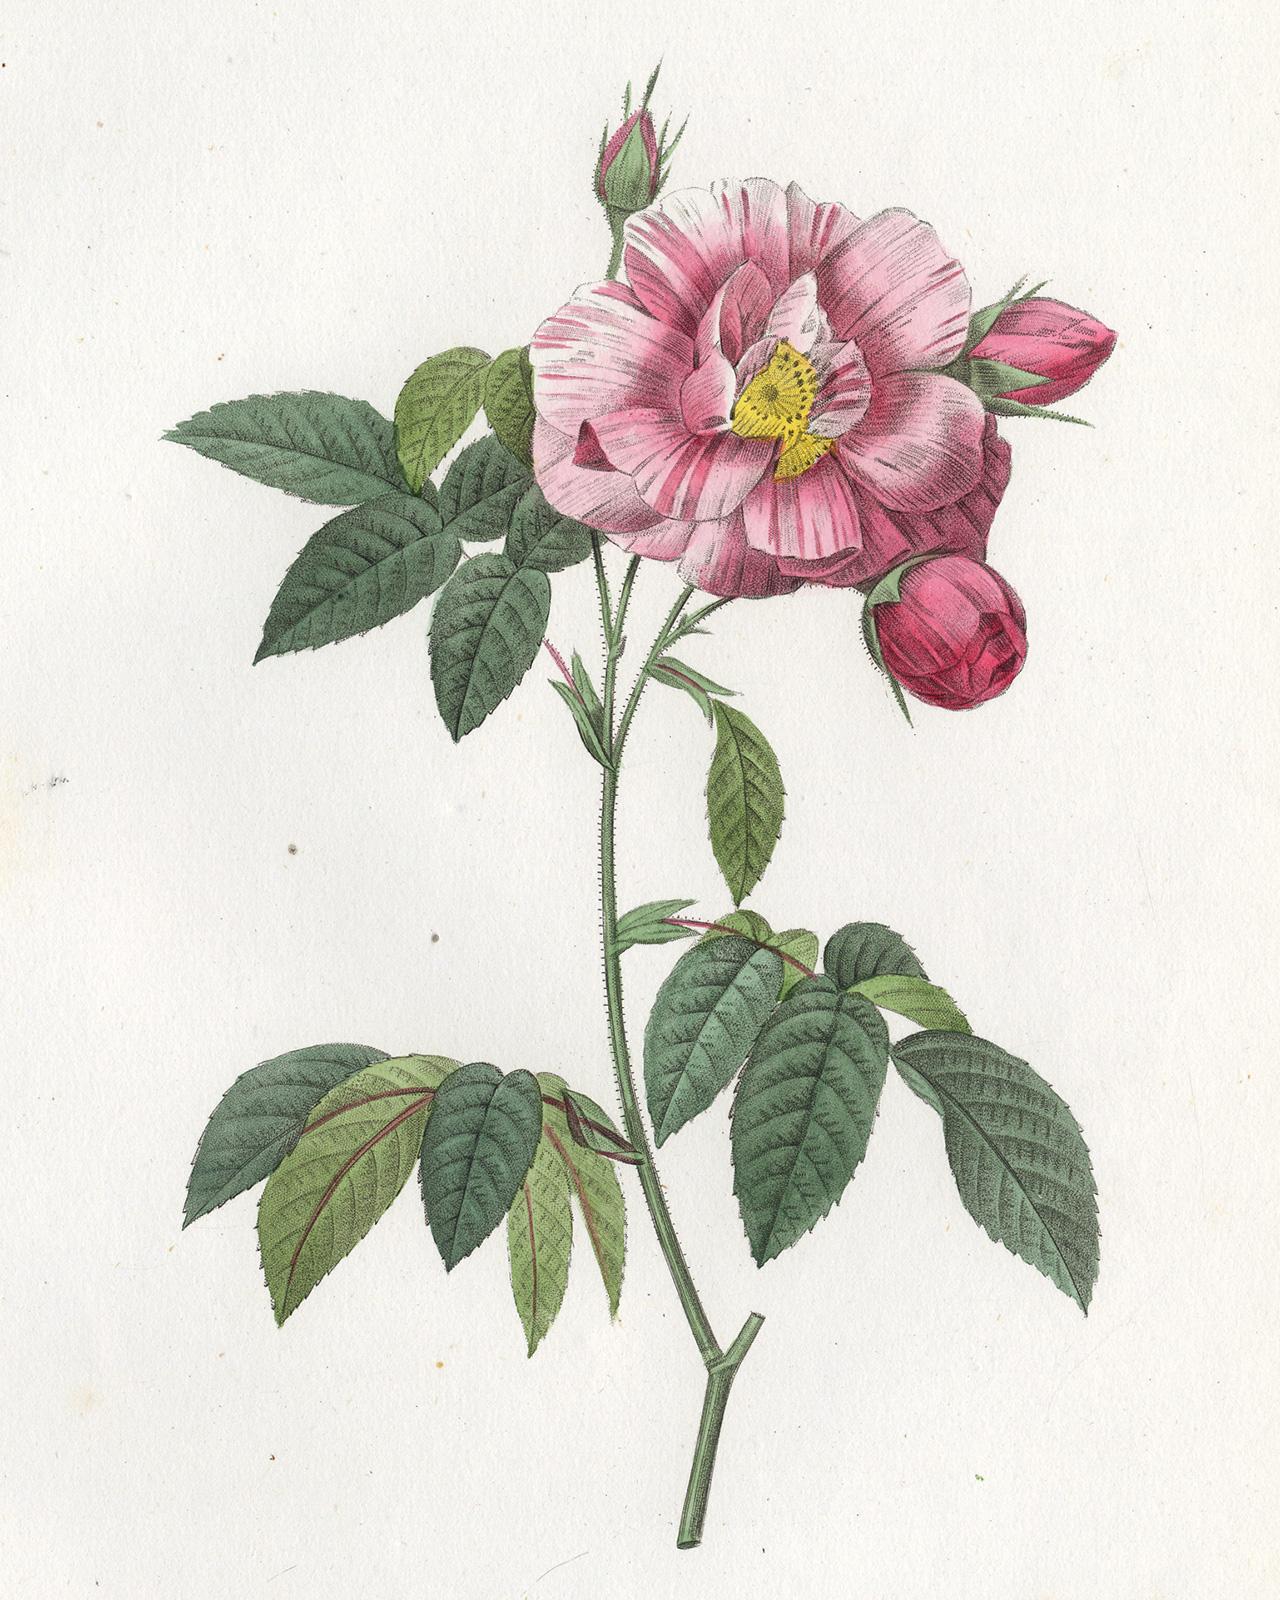 Rosa Mundi - Gallica Versicolor by Redoute - Handcoloured engraving - 19th c. - Print by Pierre-Joseph Redouté